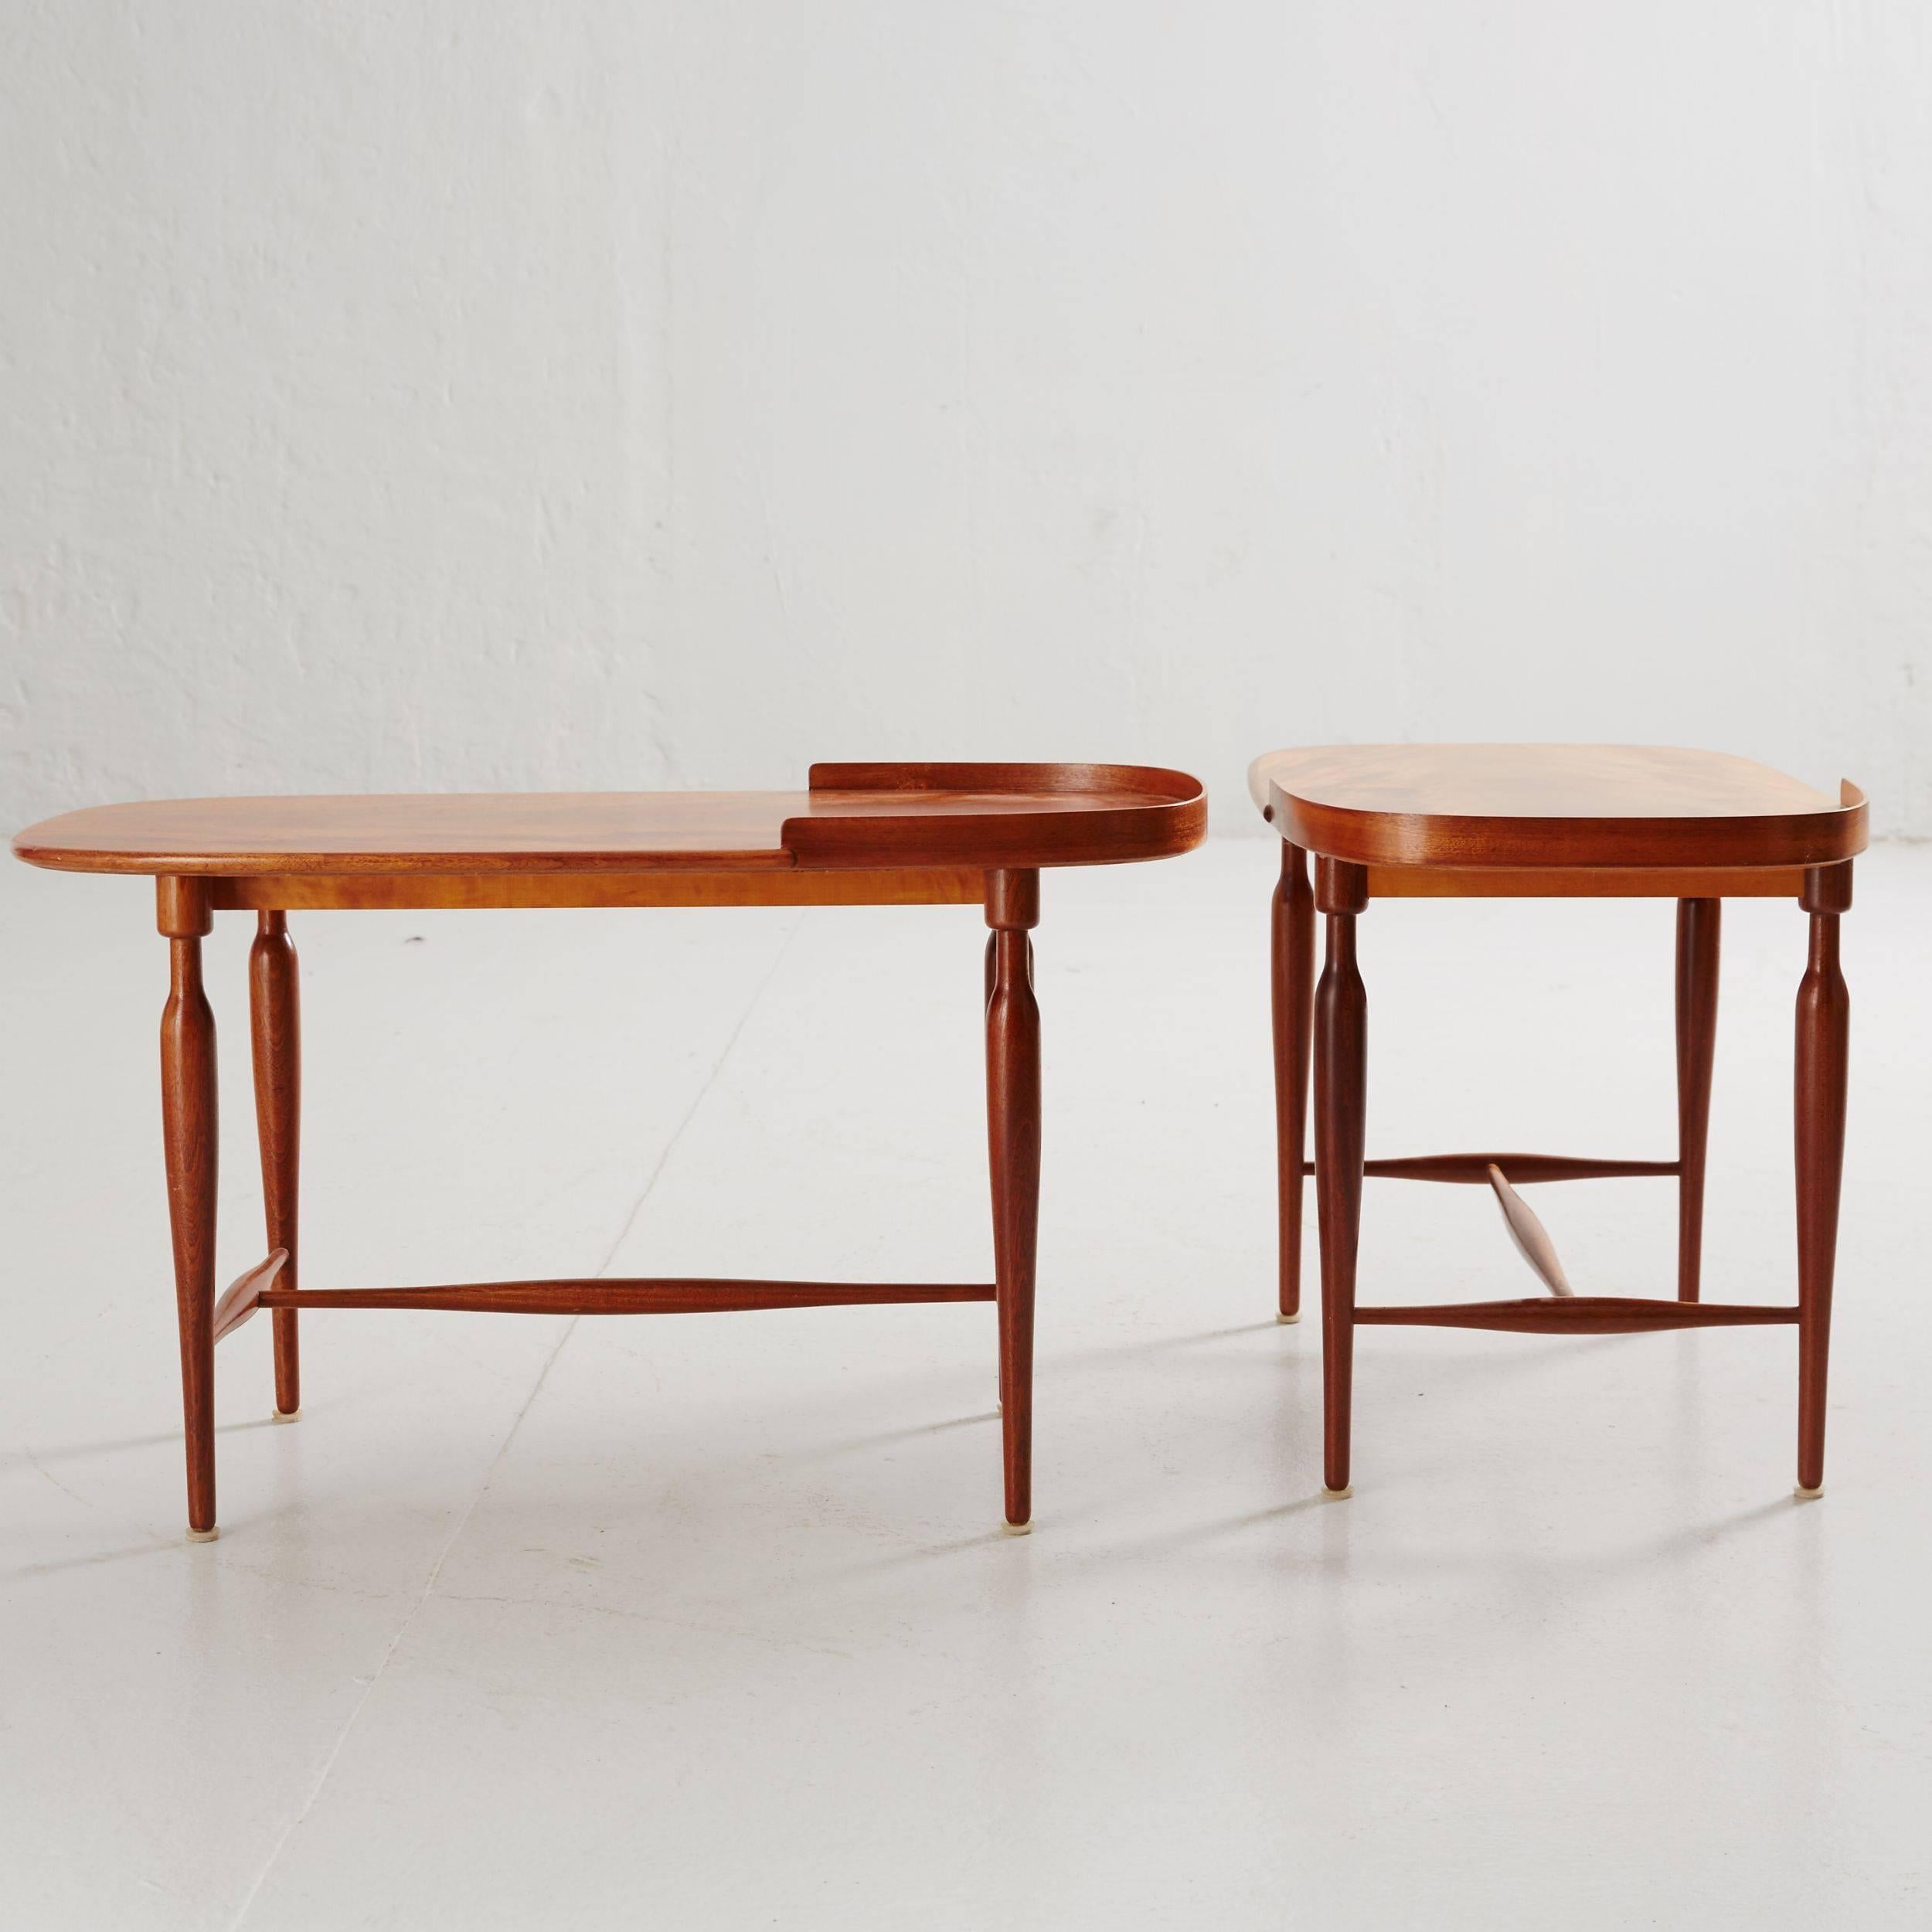 Scandinavian Modern Josef Frank Side Tables, Model 961, Design Sweden, 1938